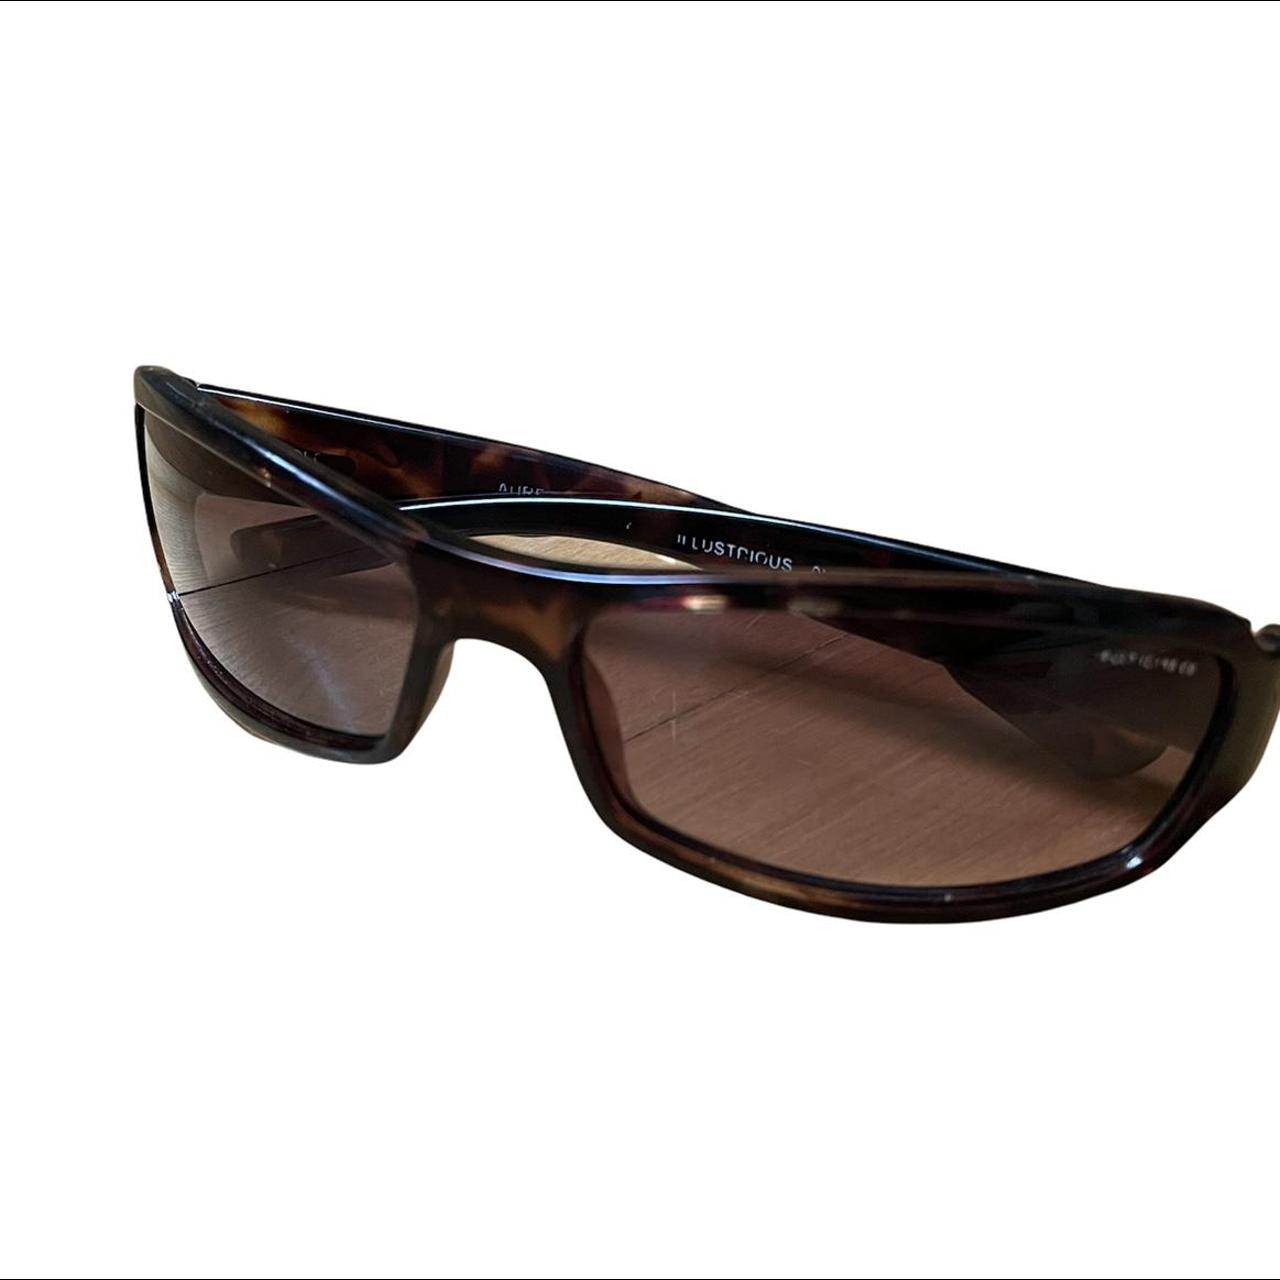 Product Image 1 - 90s Ralph Lauren sunglasses
Wrap sunglasses
some